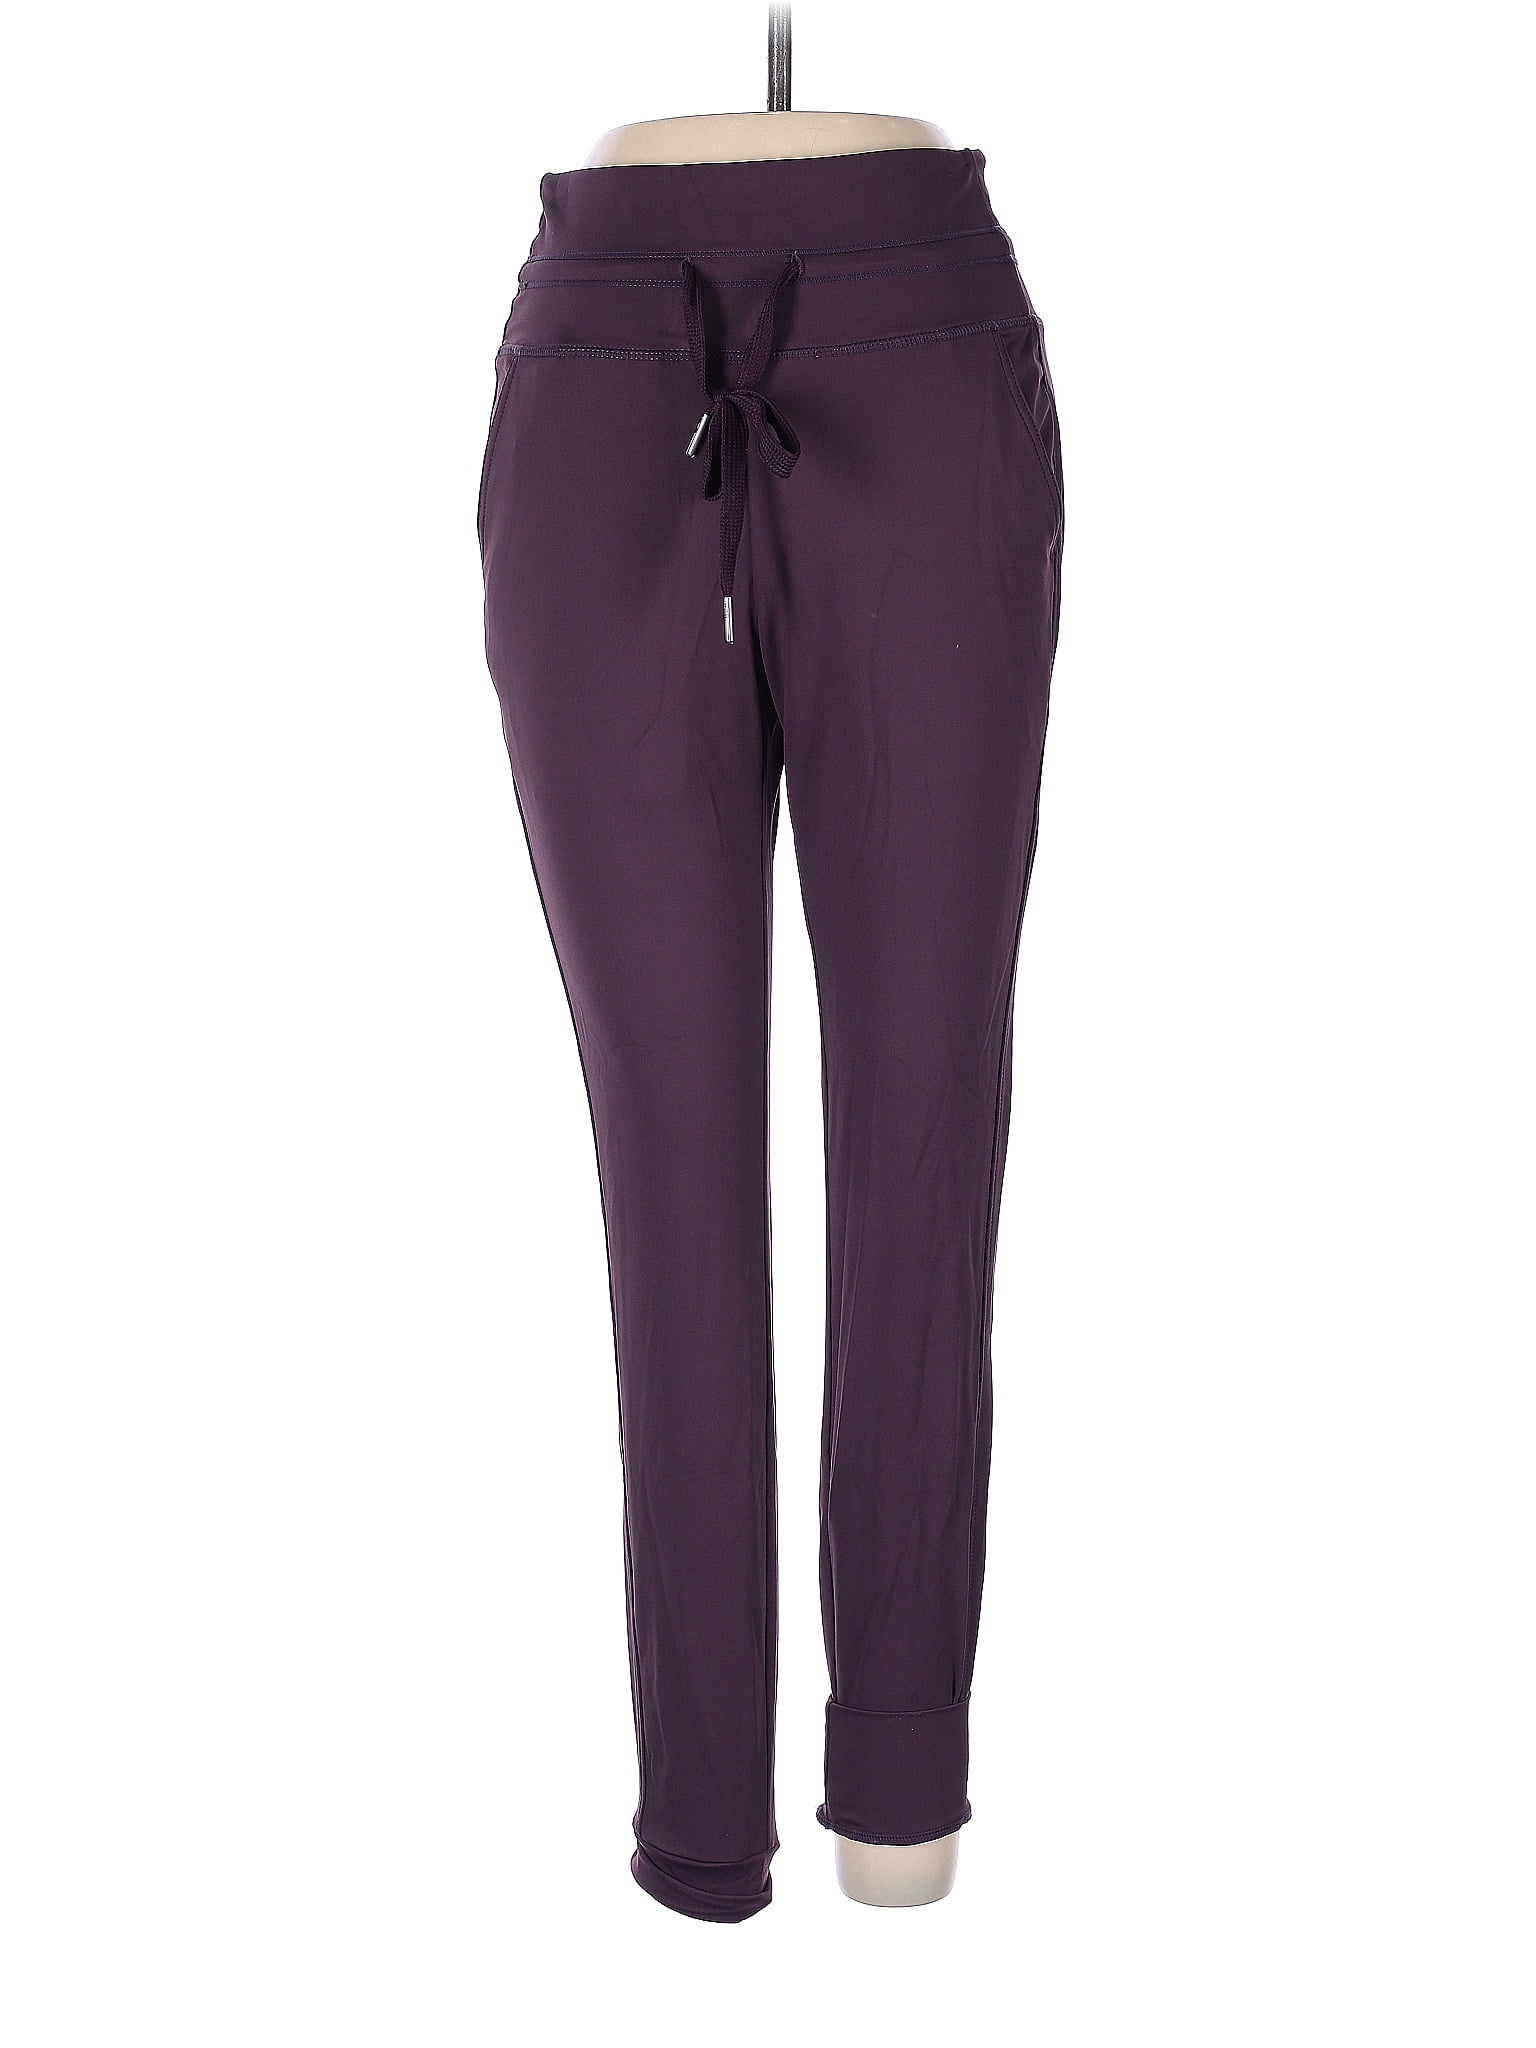 Halara Purple Active Pants Size XS - 54% off